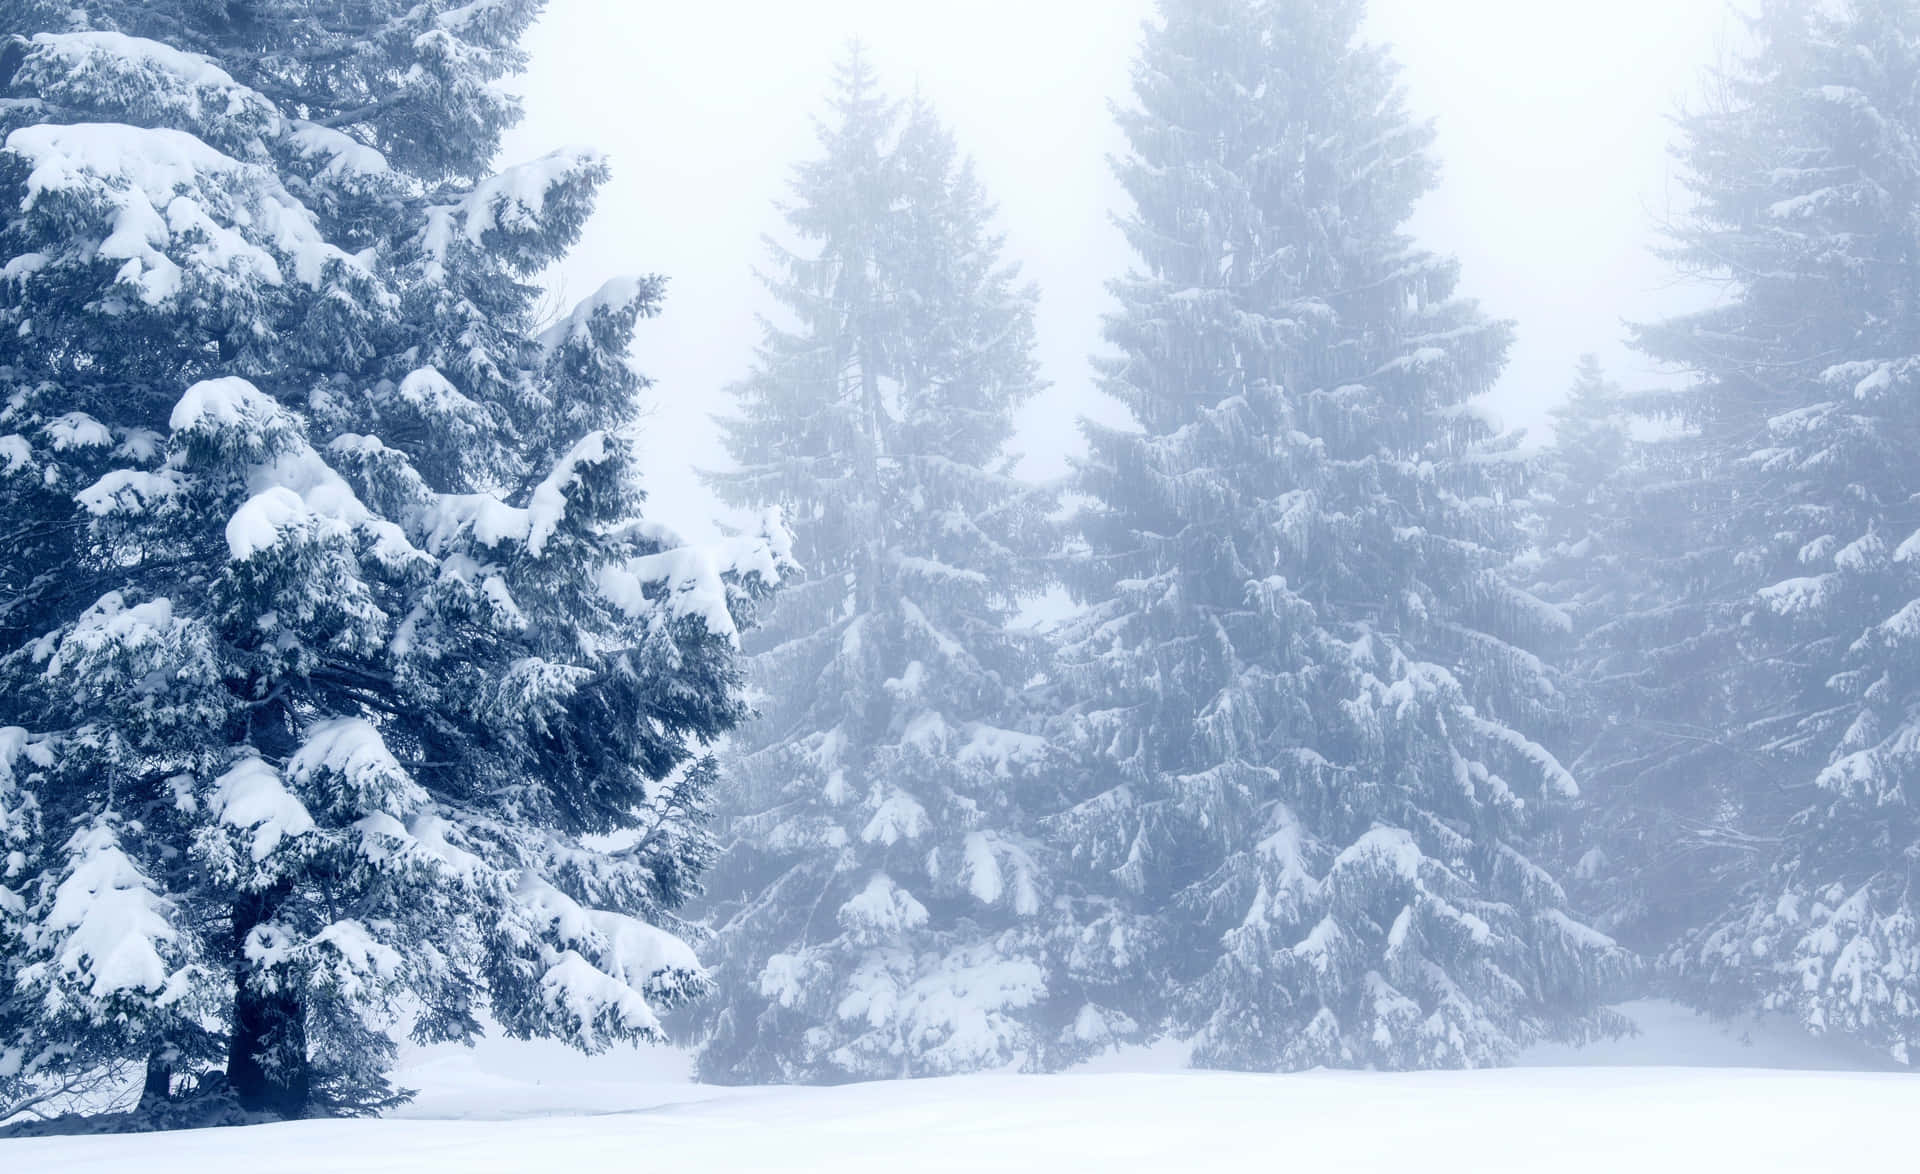 Snow-covered Trees in Winter Wonderland Wallpaper